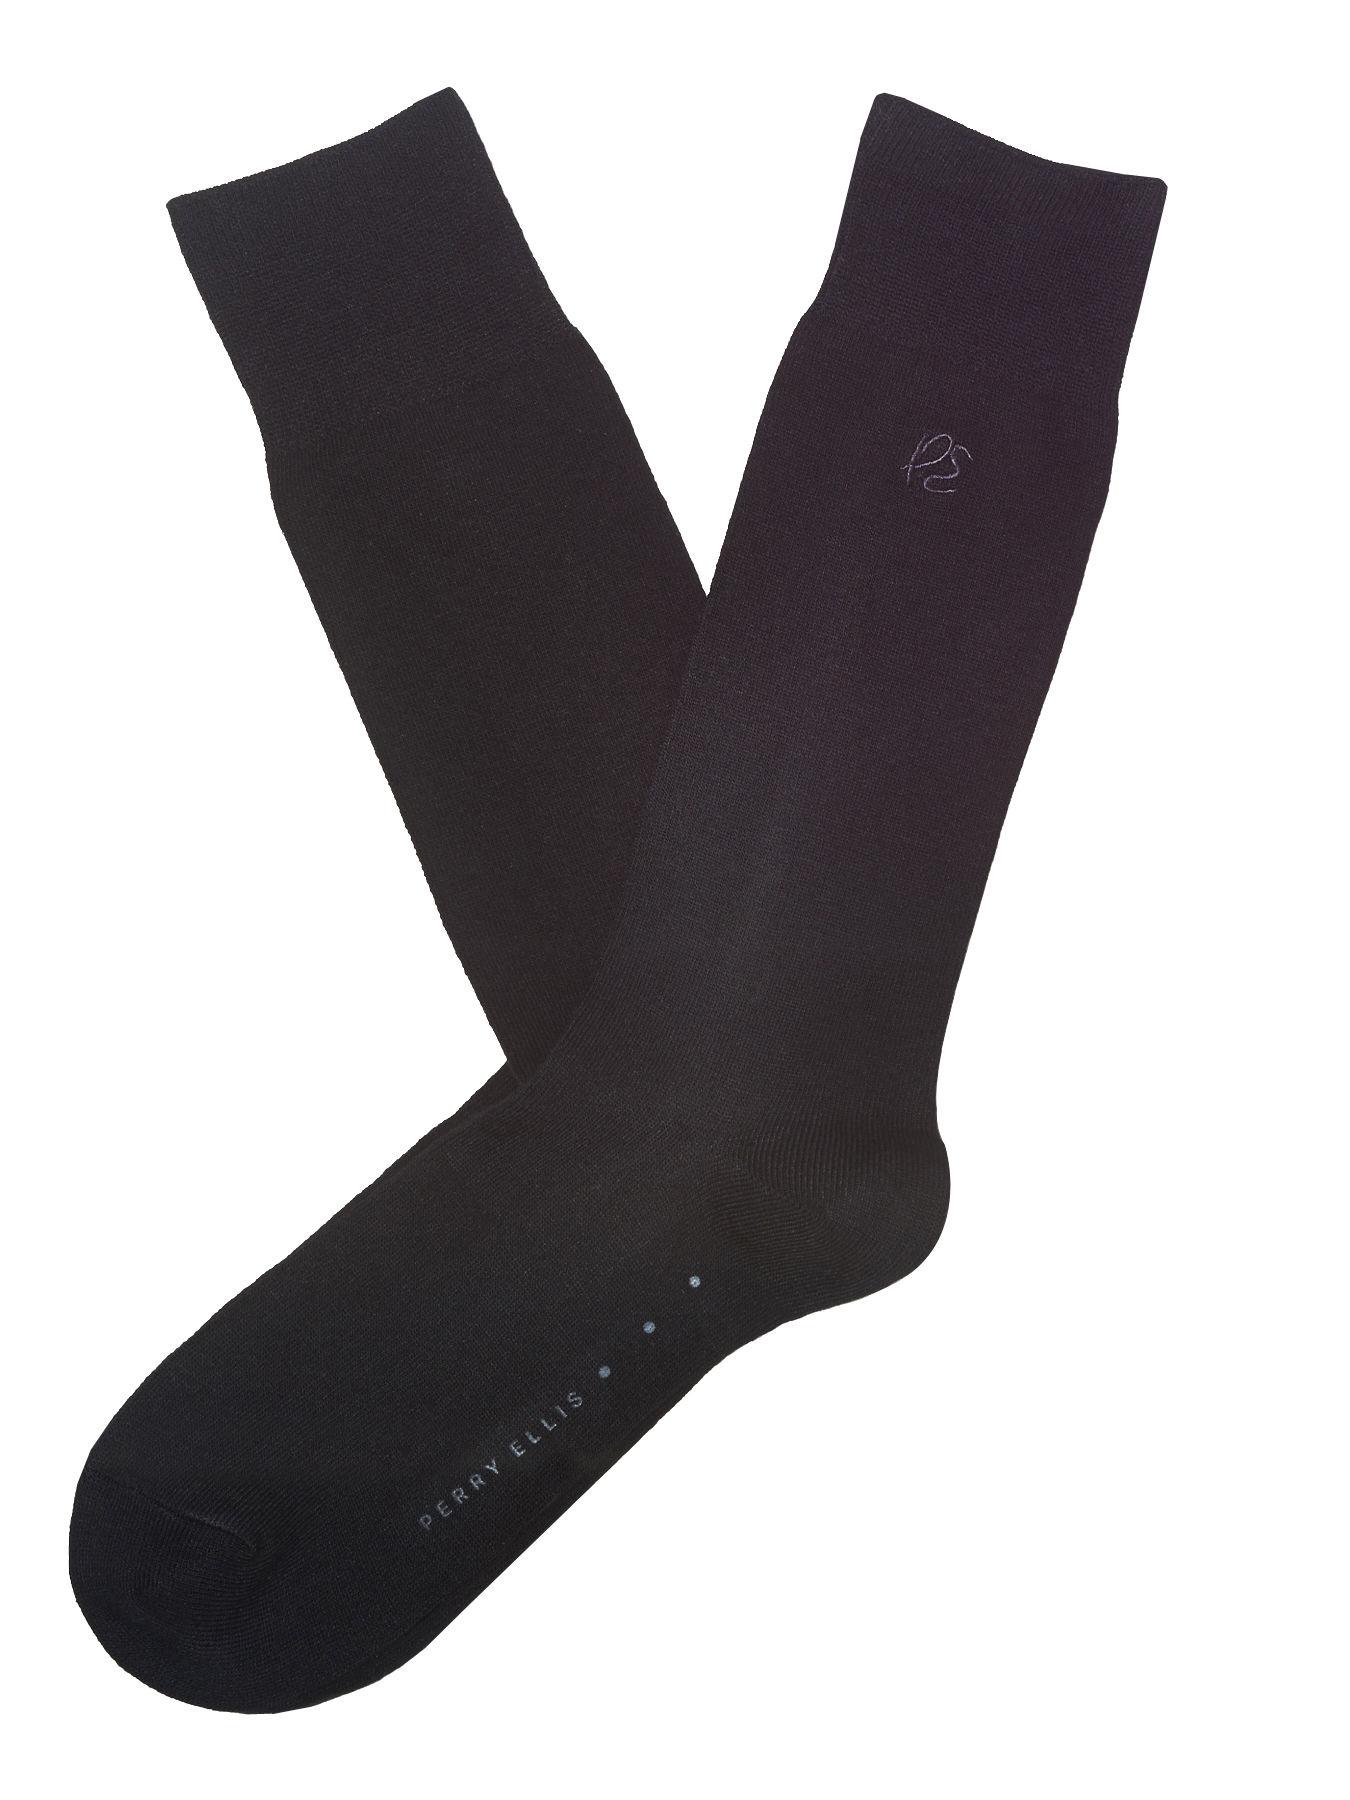 Perry Ellis Bamboo Logo Portfolio Socks in Black for Men - Lyst